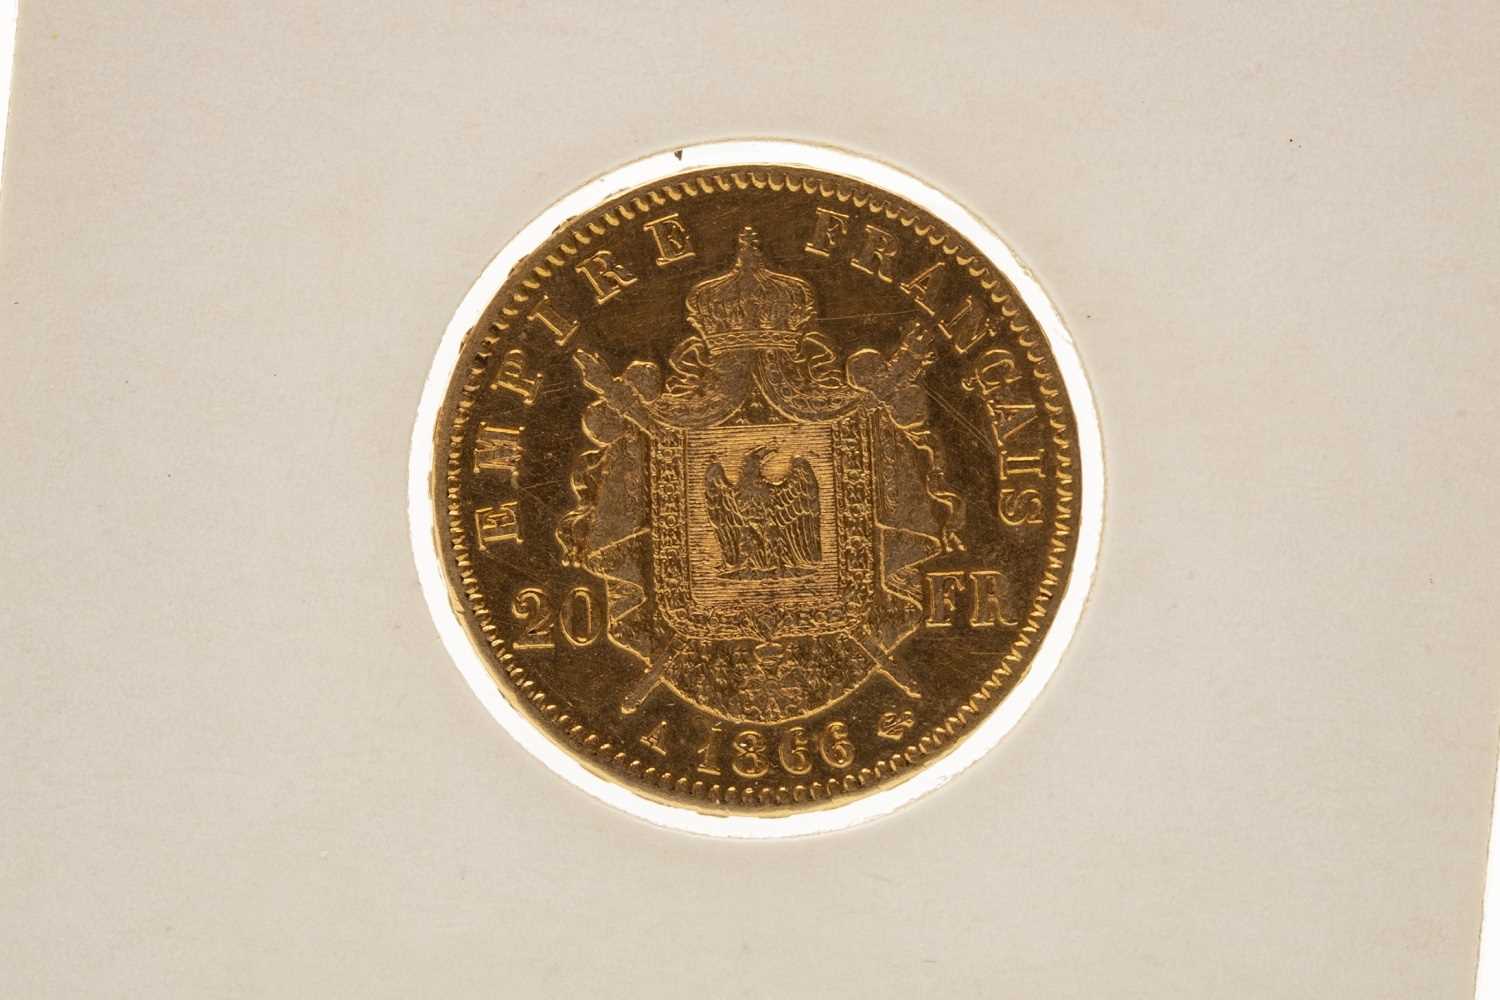 Lot 586 - A GOLD 20 FRANC COIN, 1866